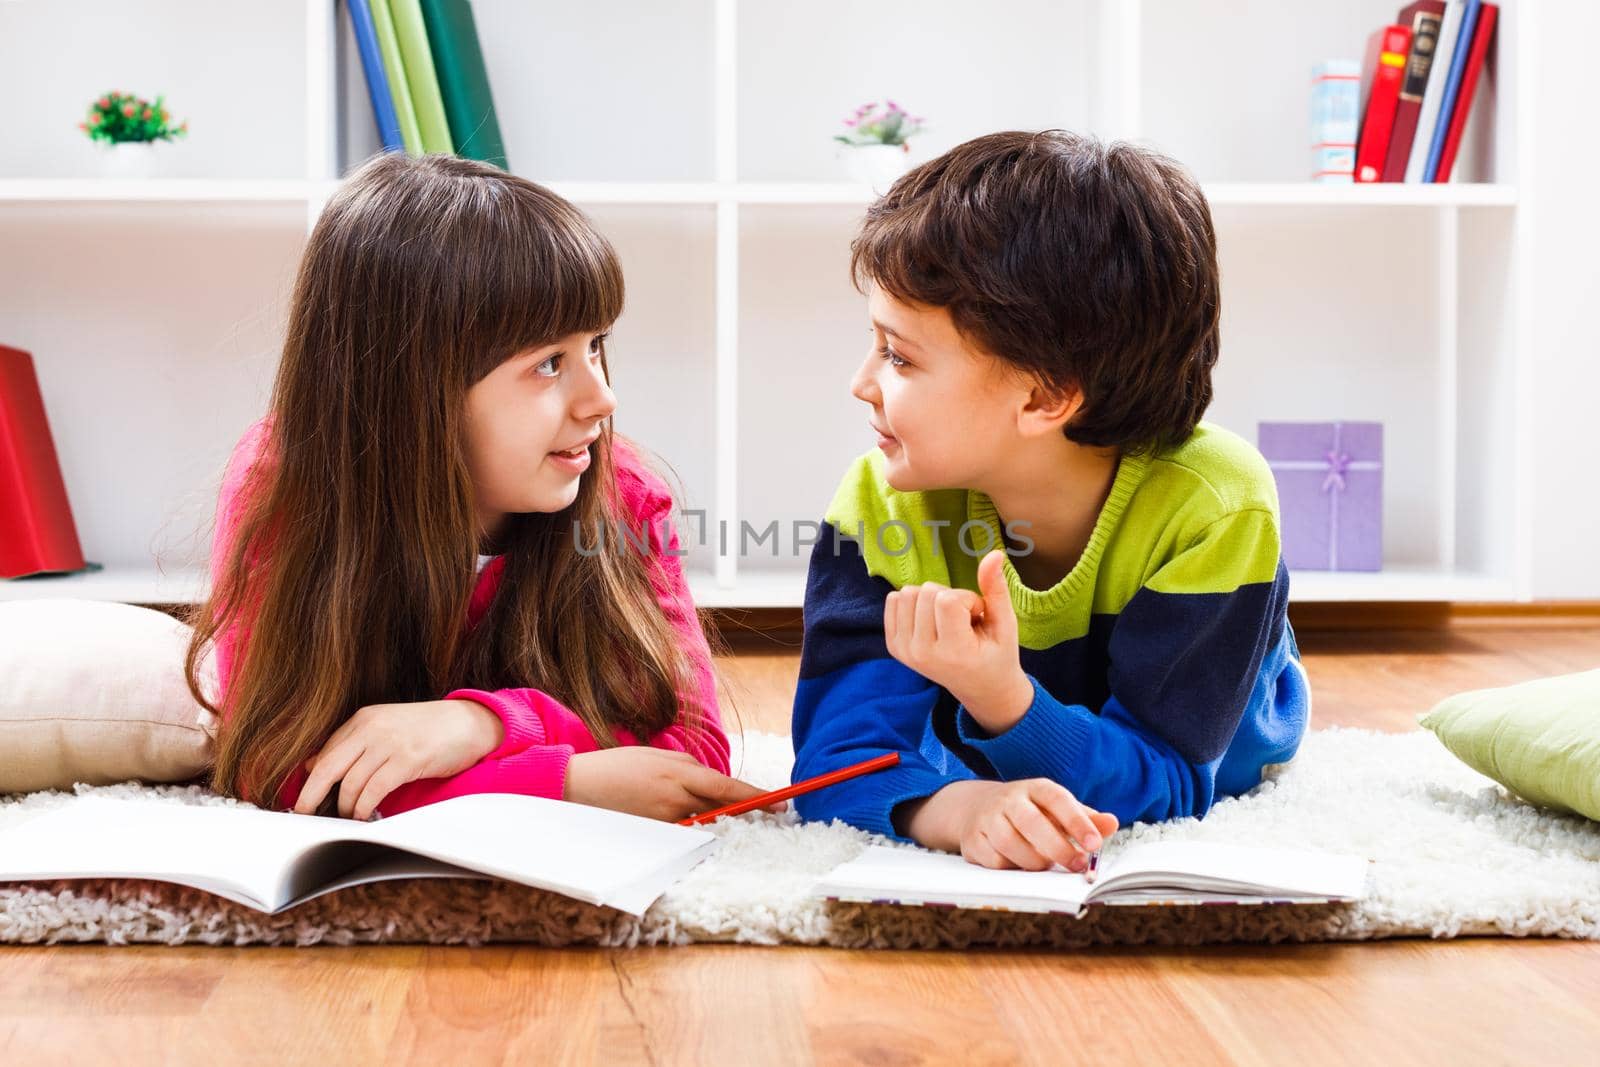 Image of children doing homework and talking.